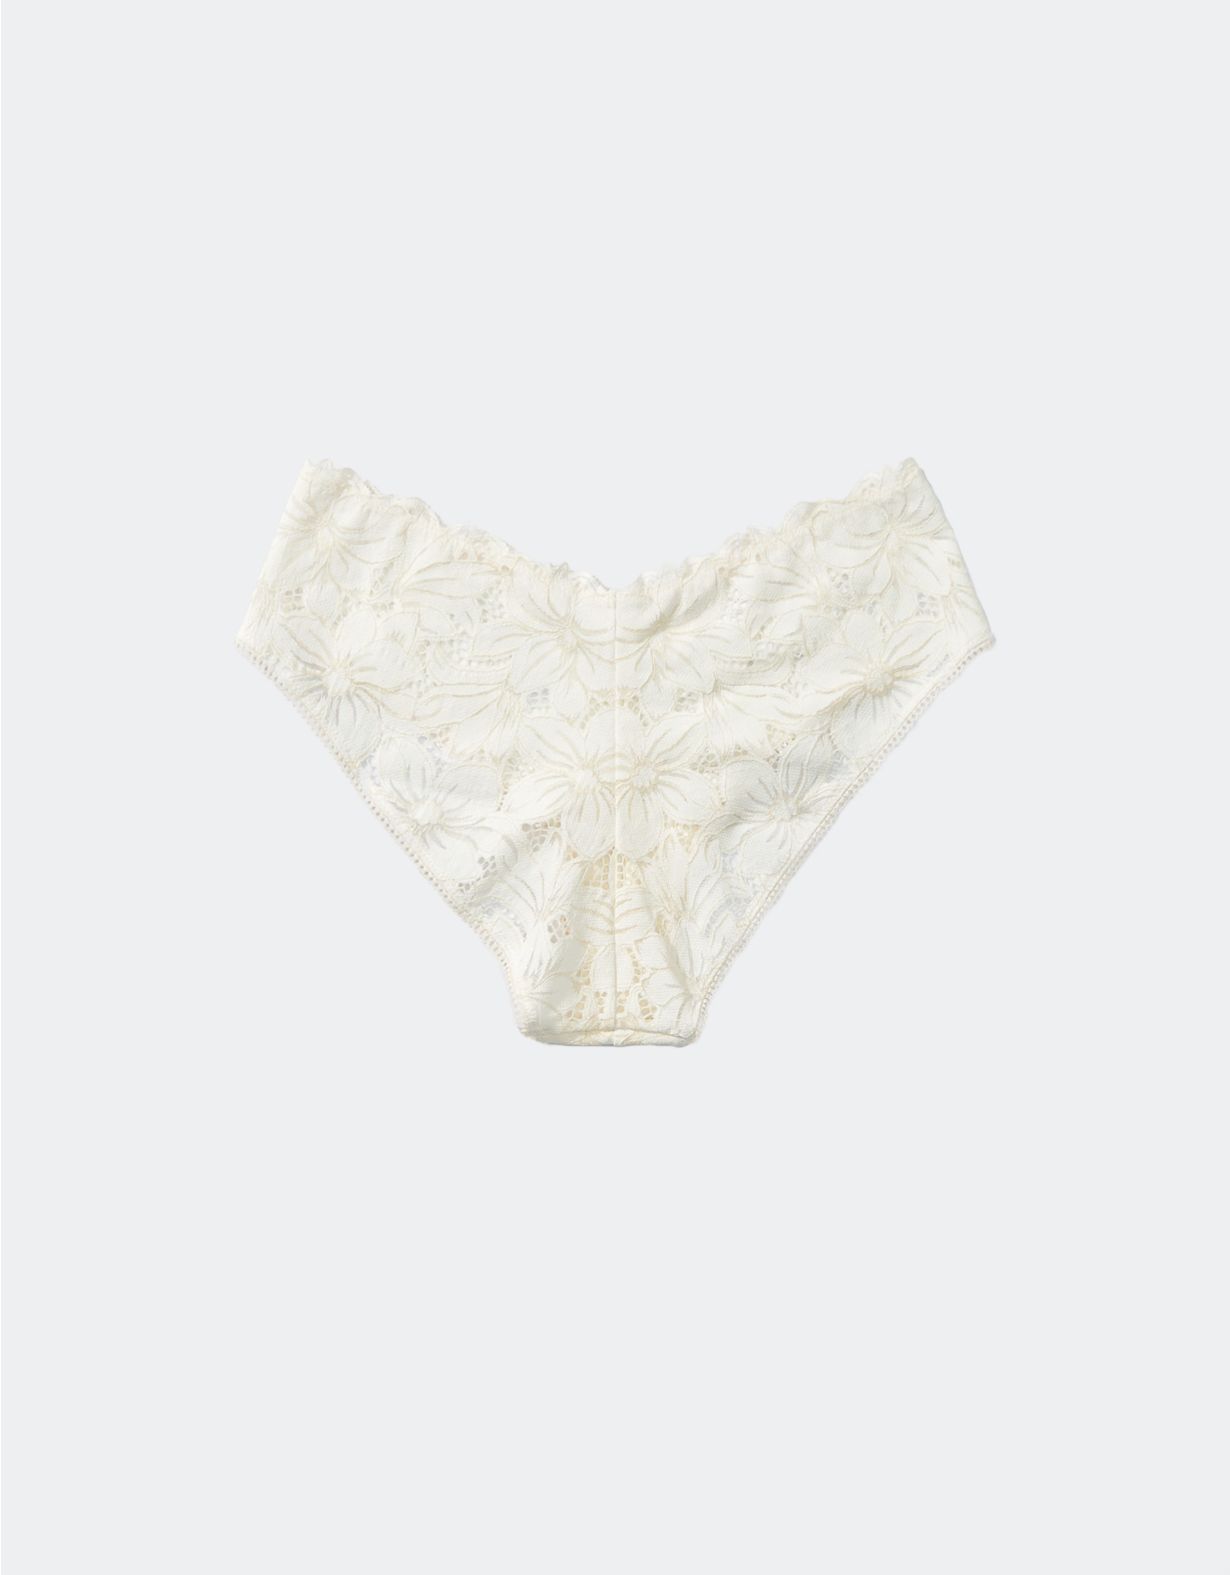 Aerie Crochet Lace Cheeky Underwear